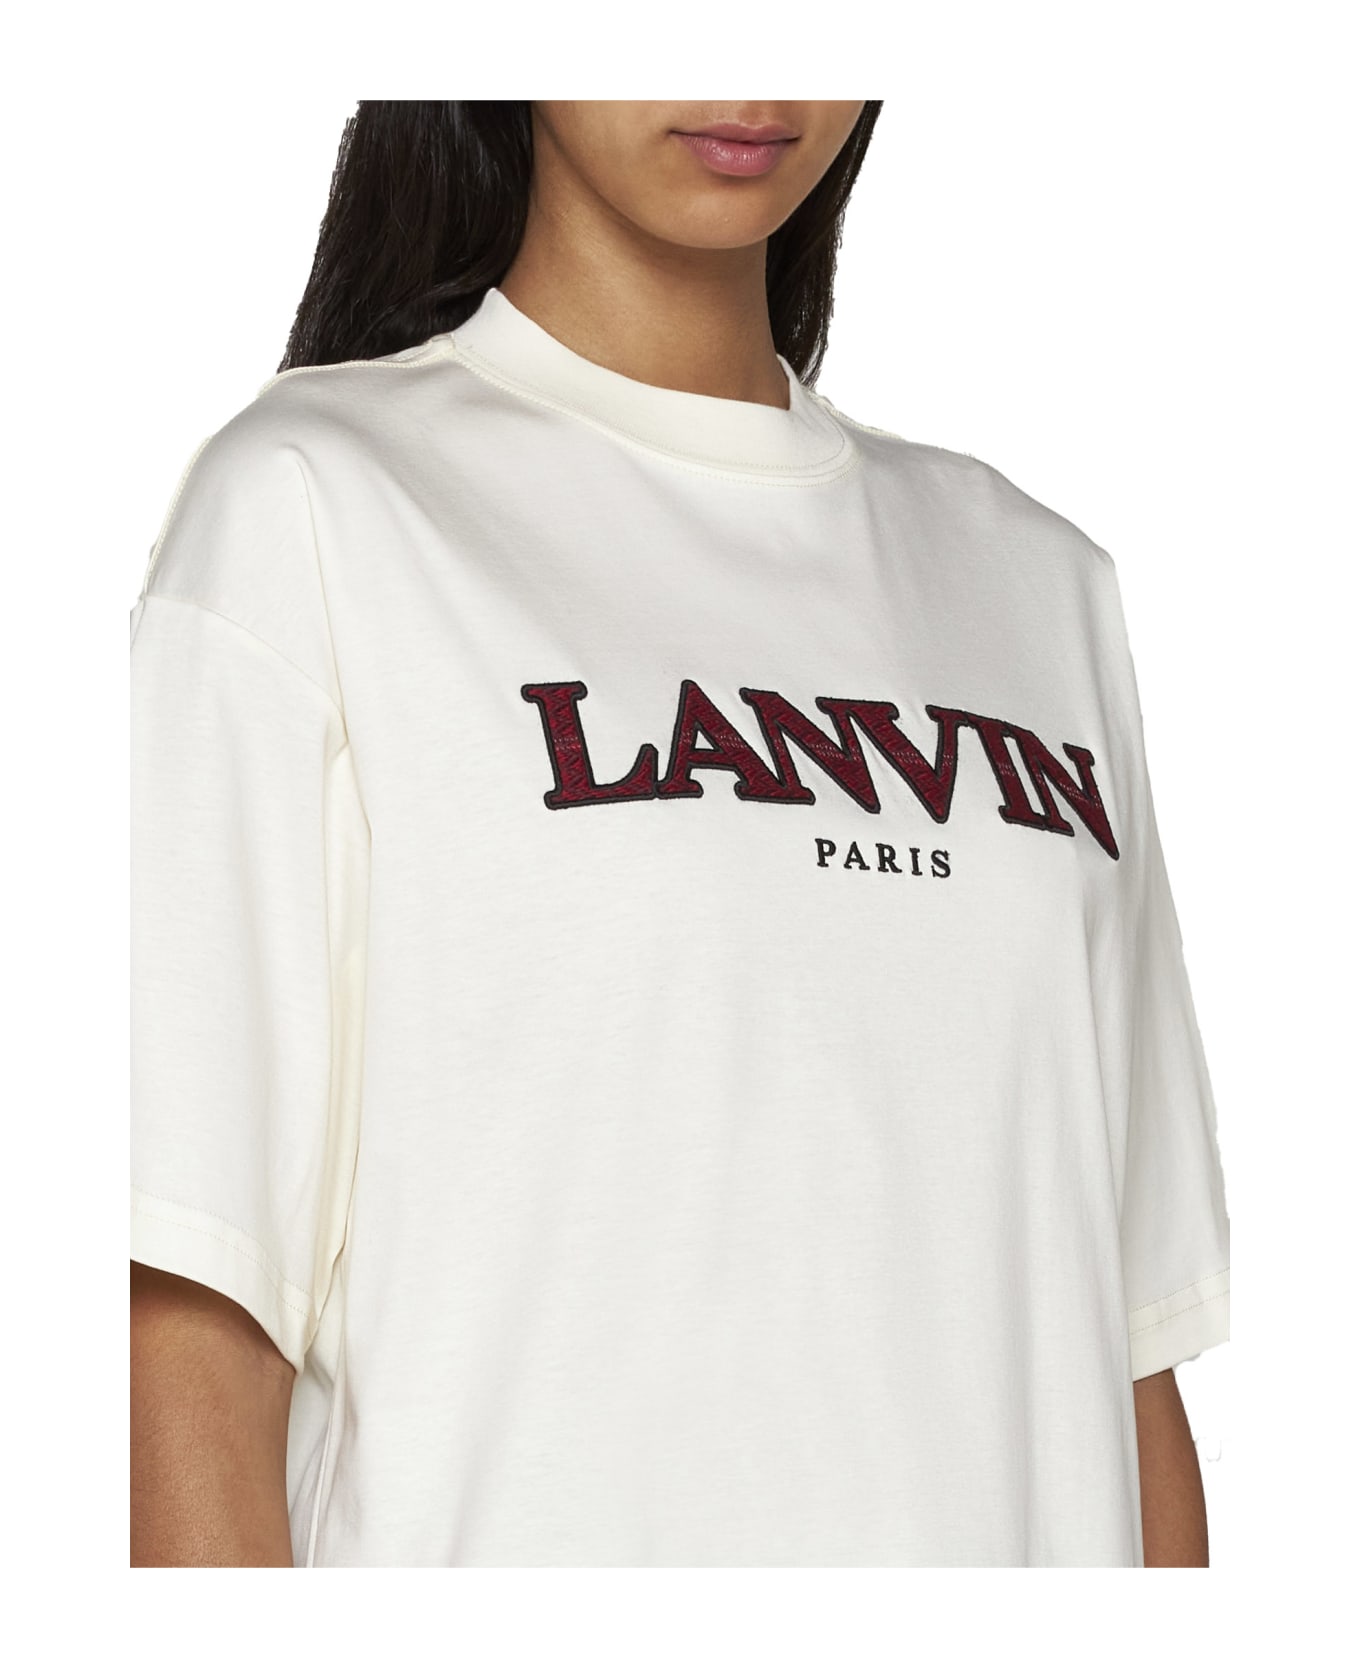 Lanvin T-Shirt - Cream